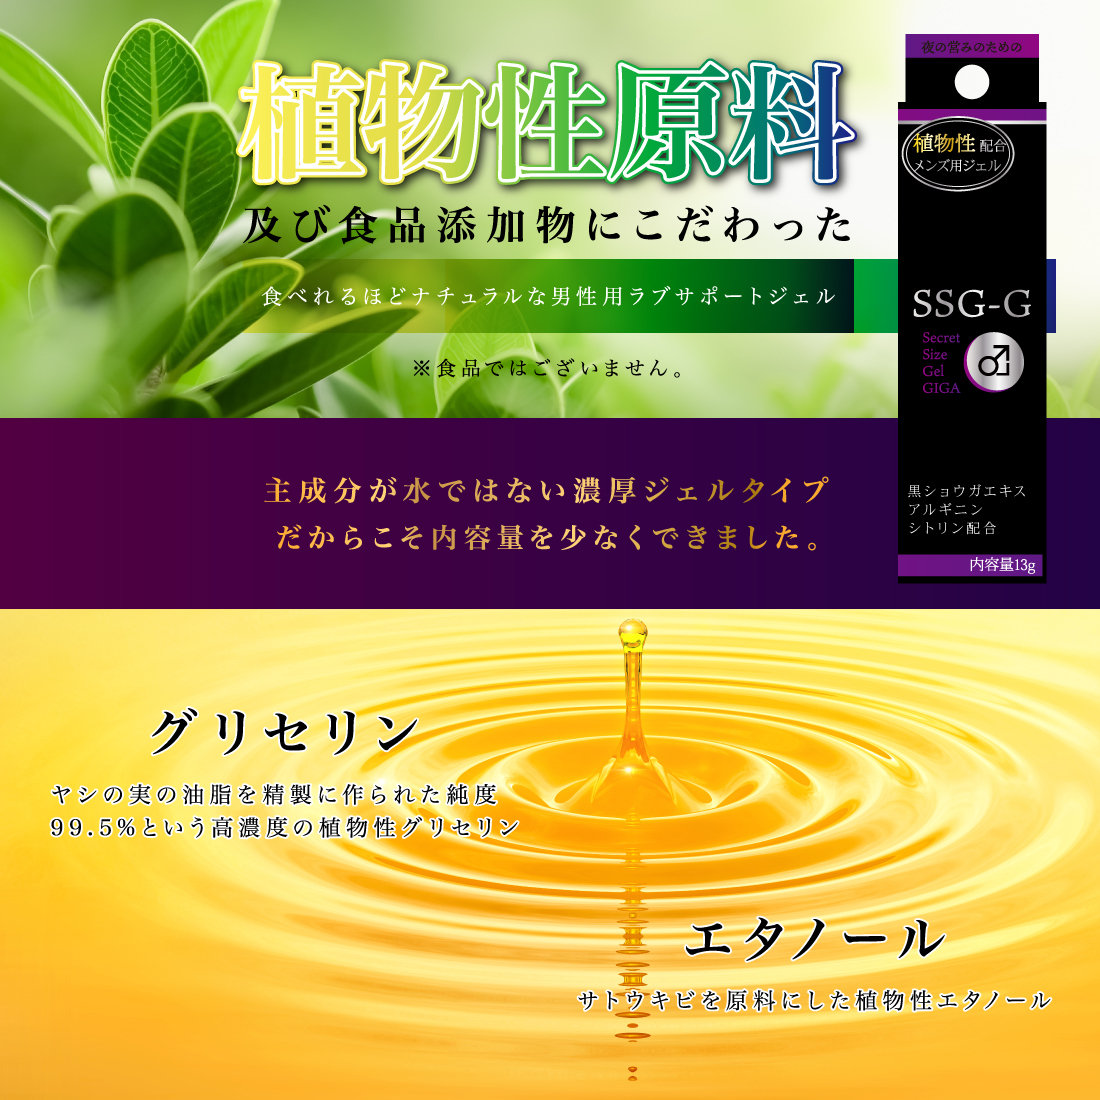 SSG-G new sense . ultra gel citrulline arginine kla tea Ida m combination plant .. to be fixated made in Japan ( for man ) pre jersey .ru